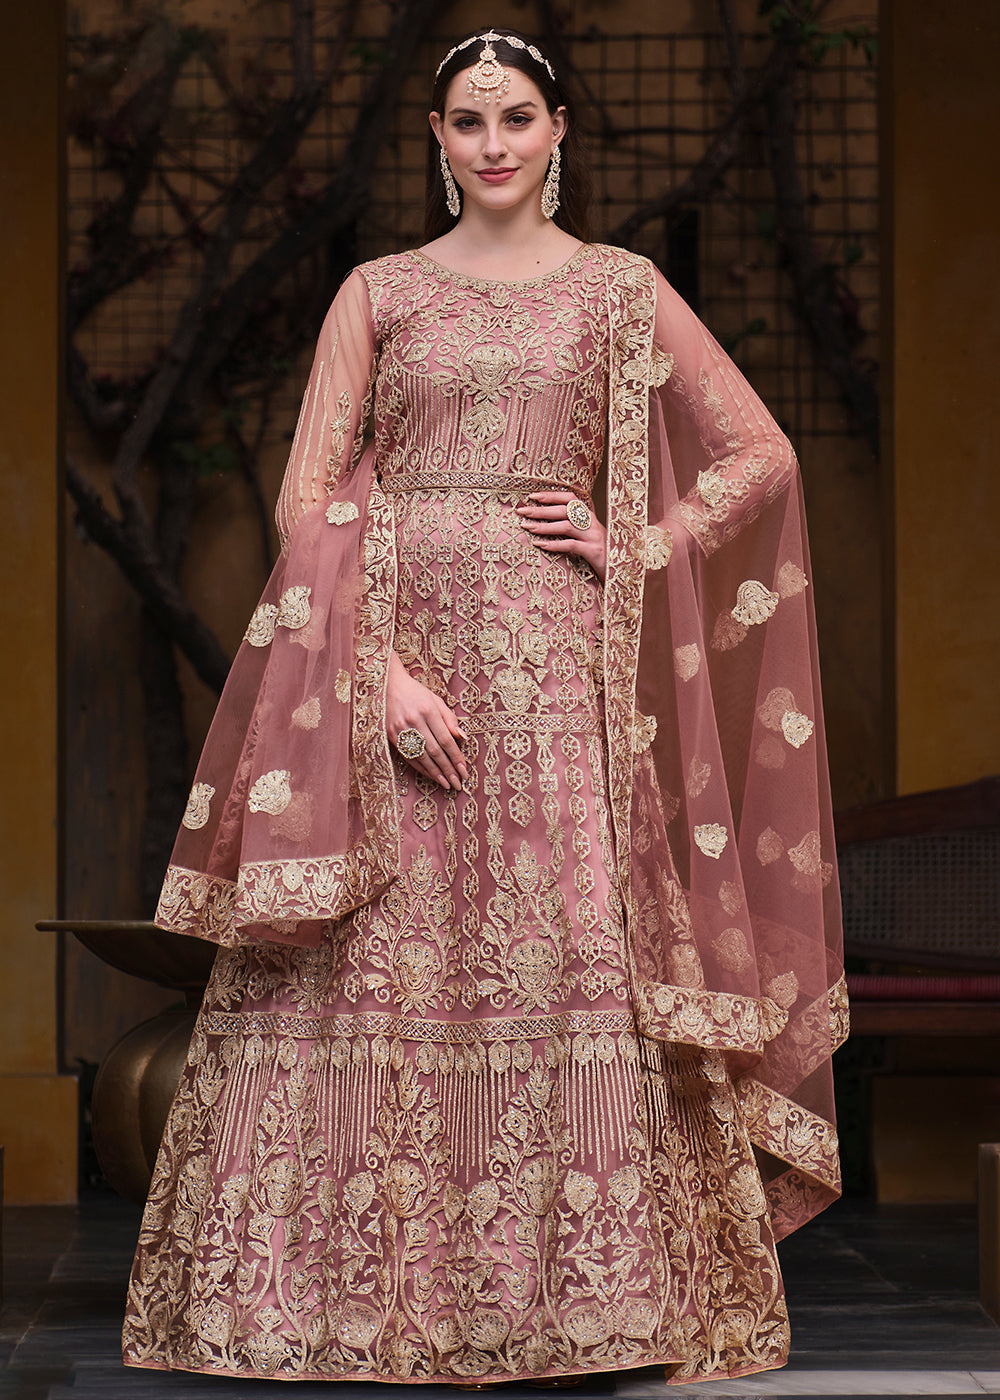 Buy Now Pretty Pink Pure Butterfly Net Wedding Wear Anarkali Suit Online in USA, UK, Australia, New Zealand, Canada & Worldwide at Empress Clothing.